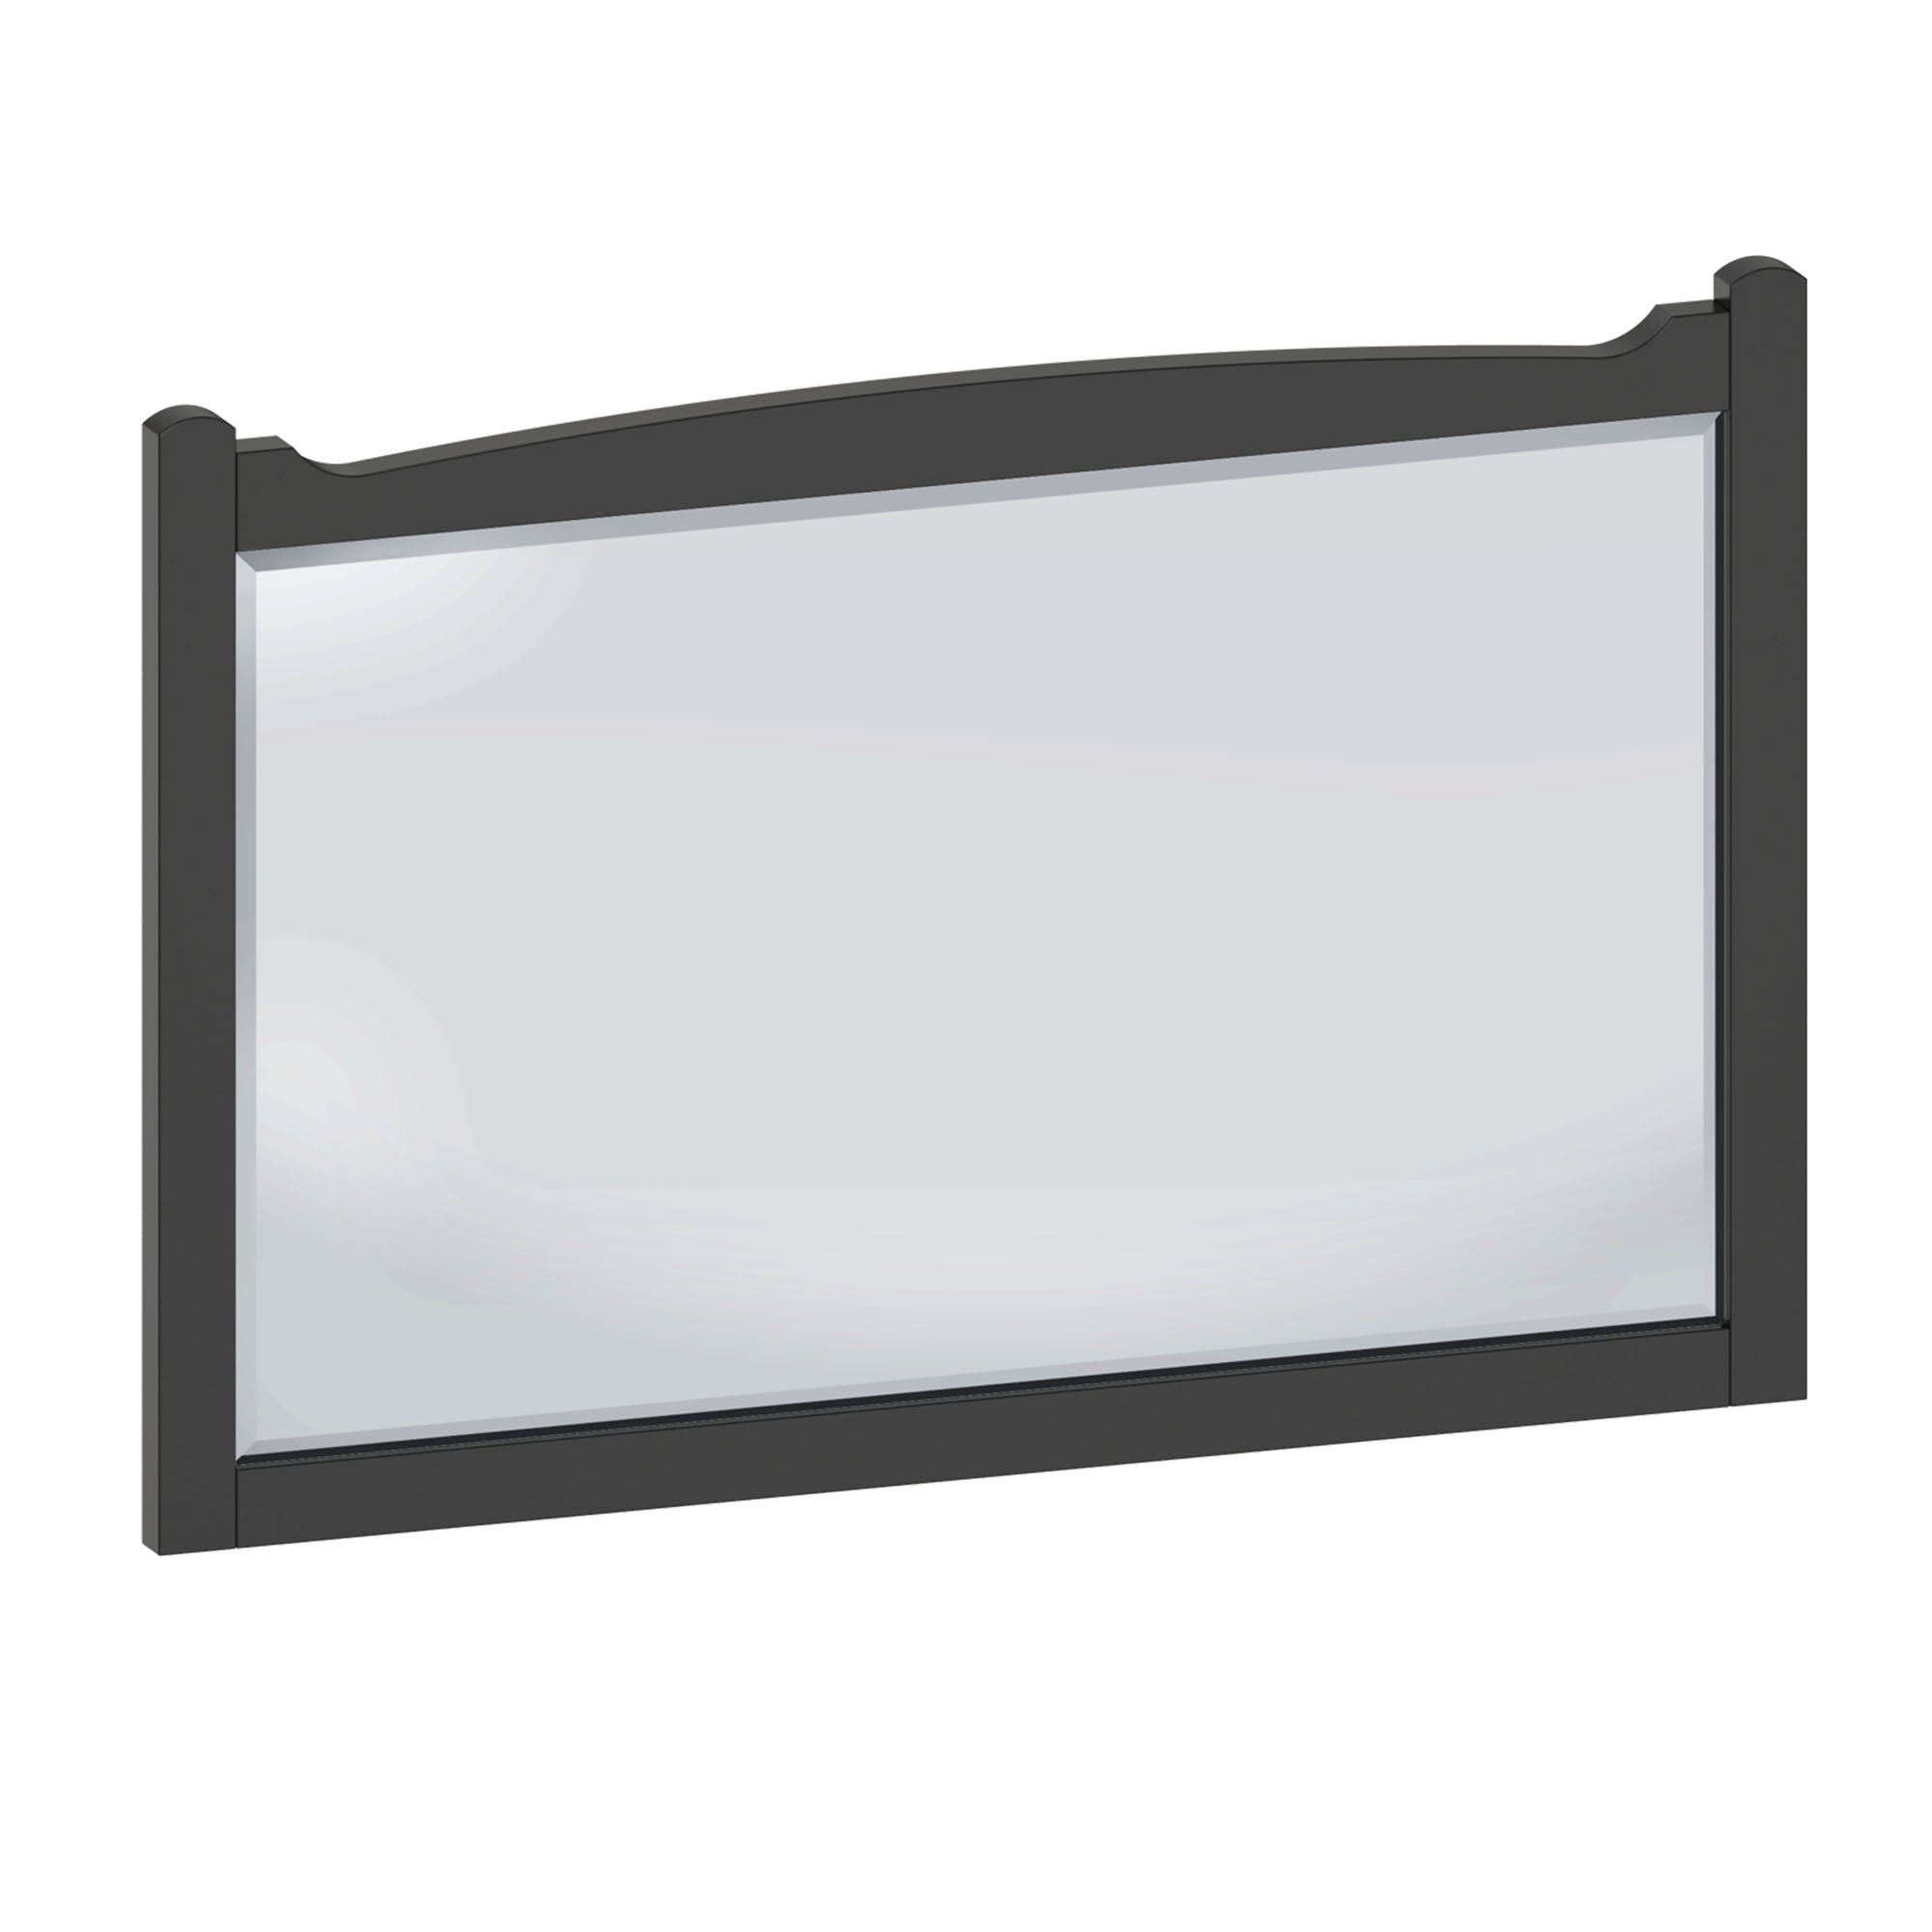 burlington guild 850 framed bathroom mirror ashbee grey